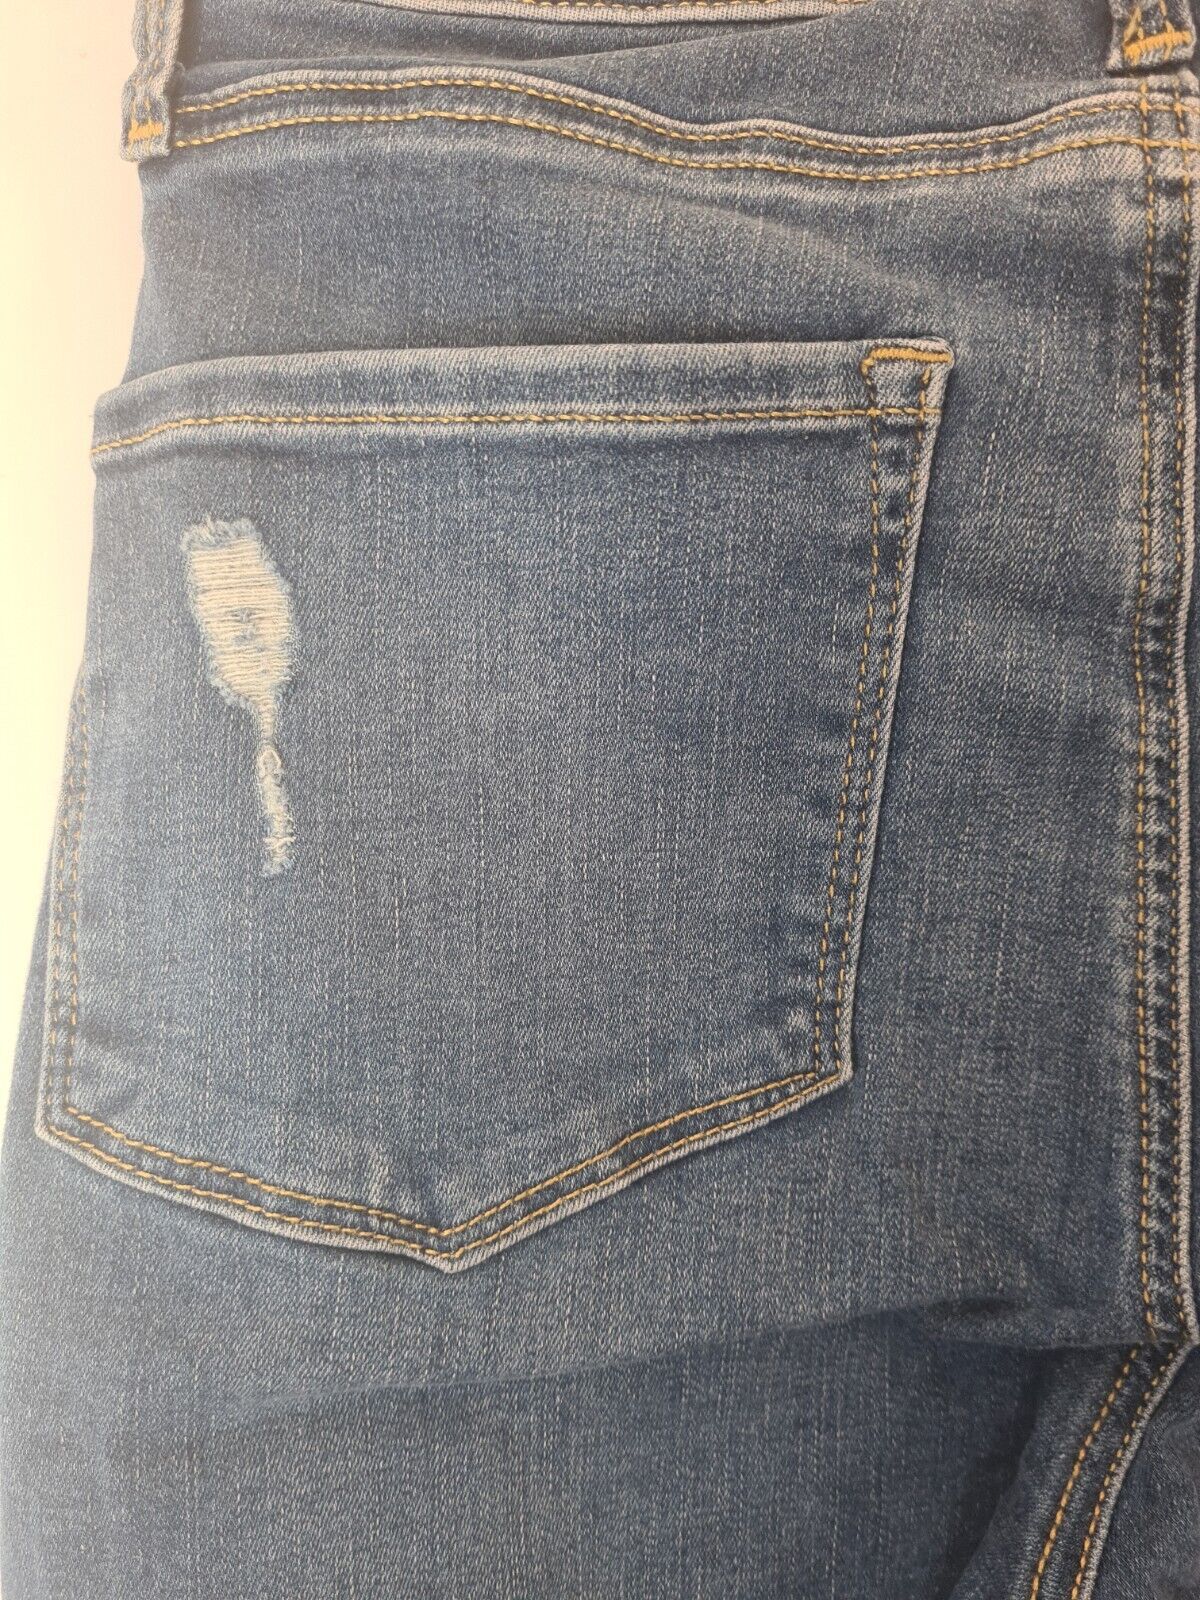 Michelle Keegan Blue Distressed Jeans Size UK 6 **** V30S